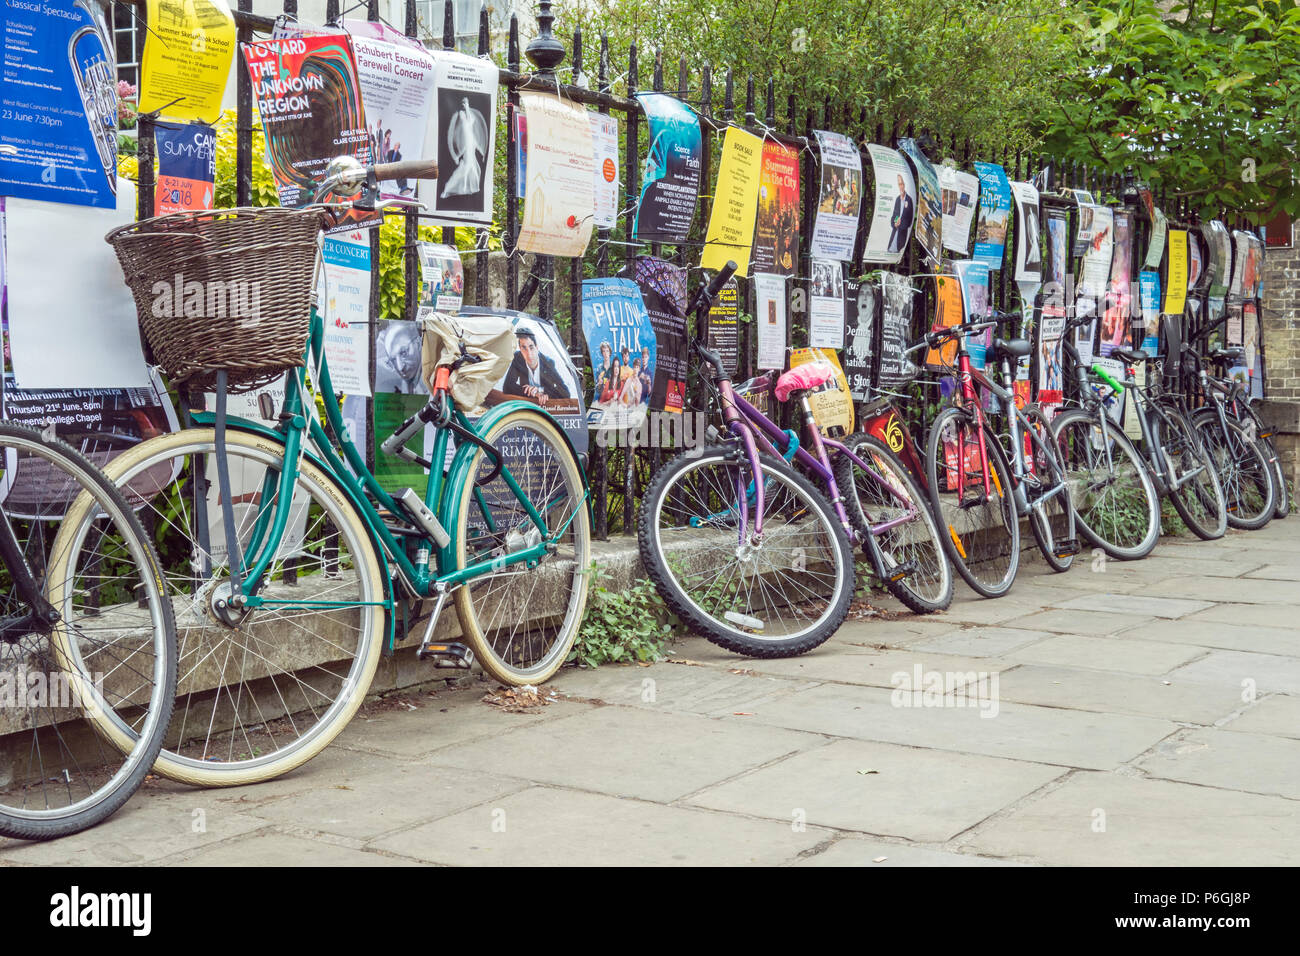 Student bicycles and fliers on railings, Cambridge, Cambridgeshire, England Stock Photo